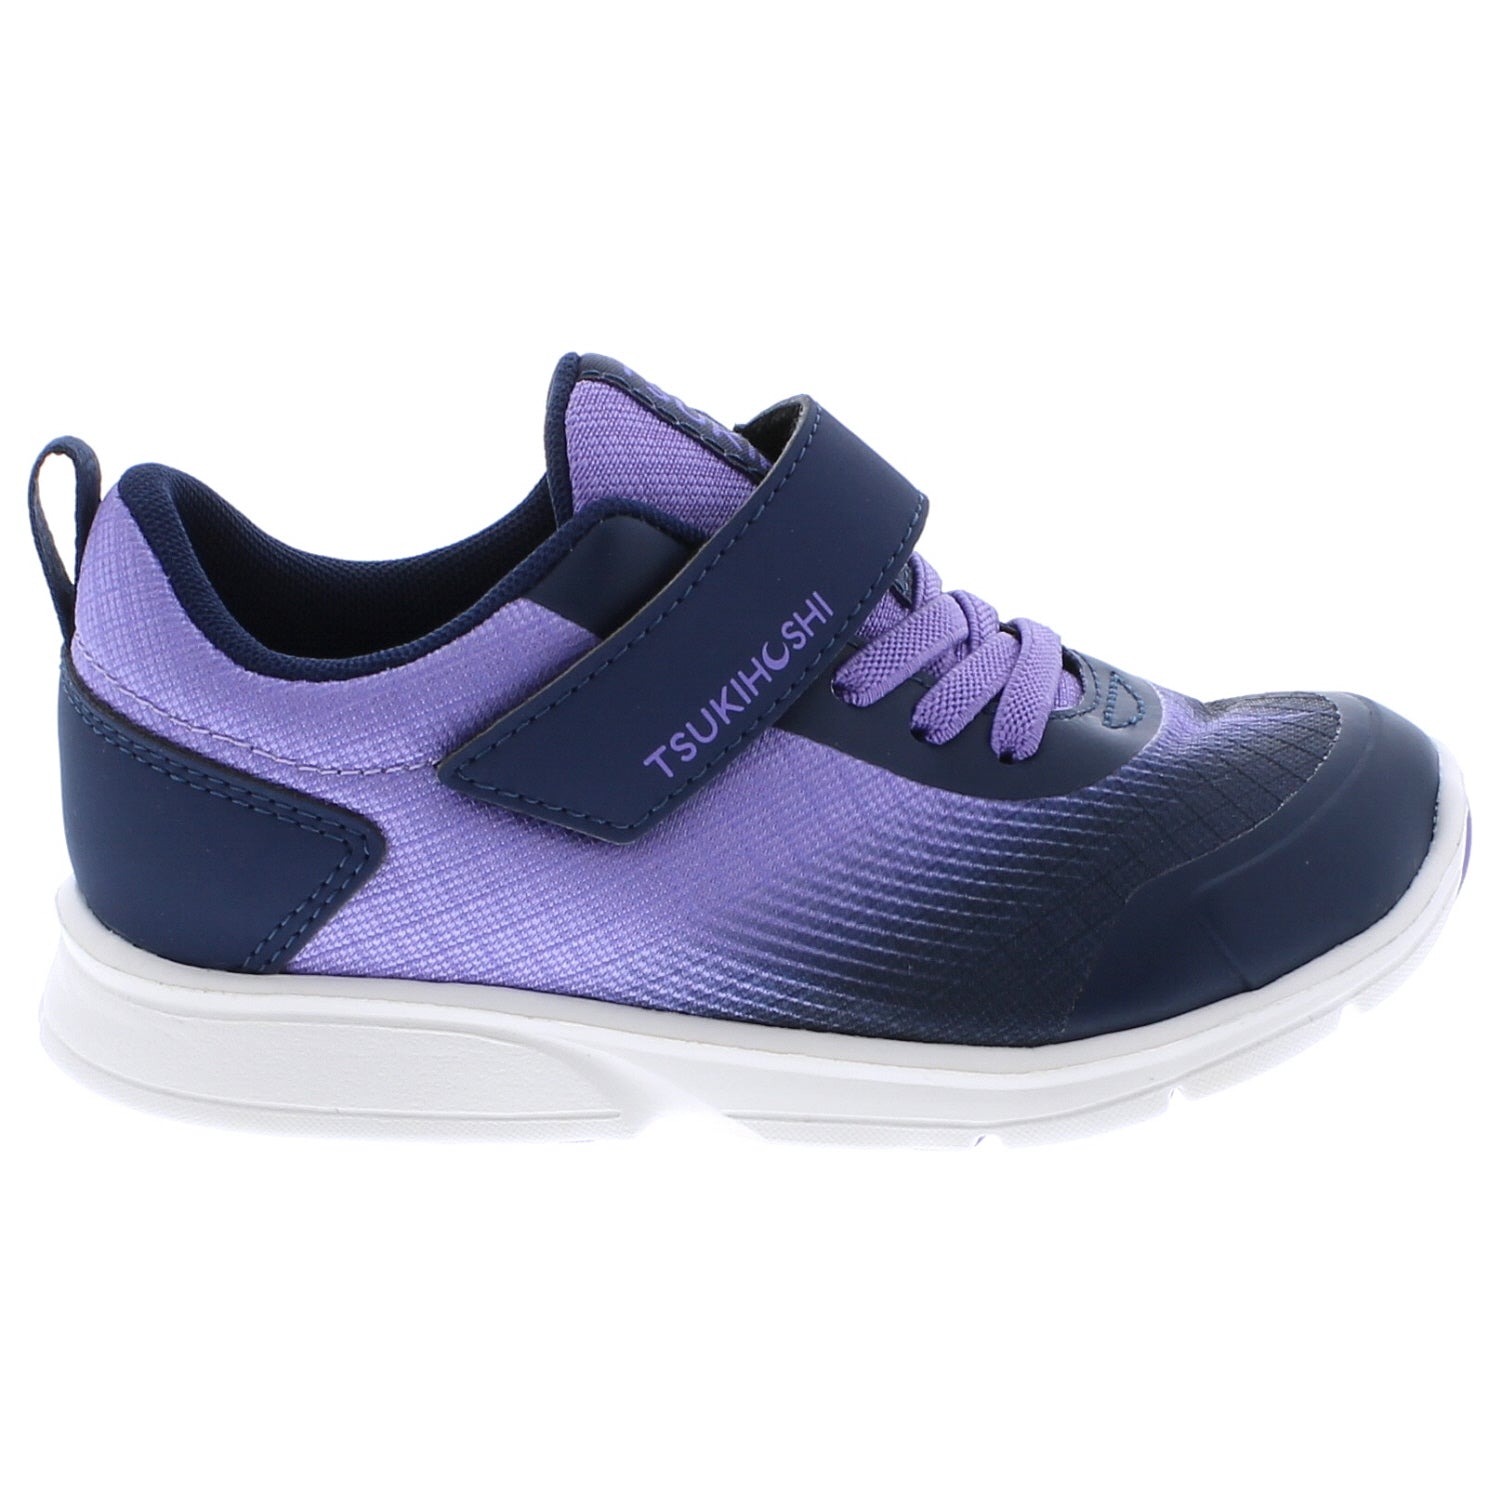 Turbo - Purple / Navy by Tsukihoshi - Ponseti's Shoes